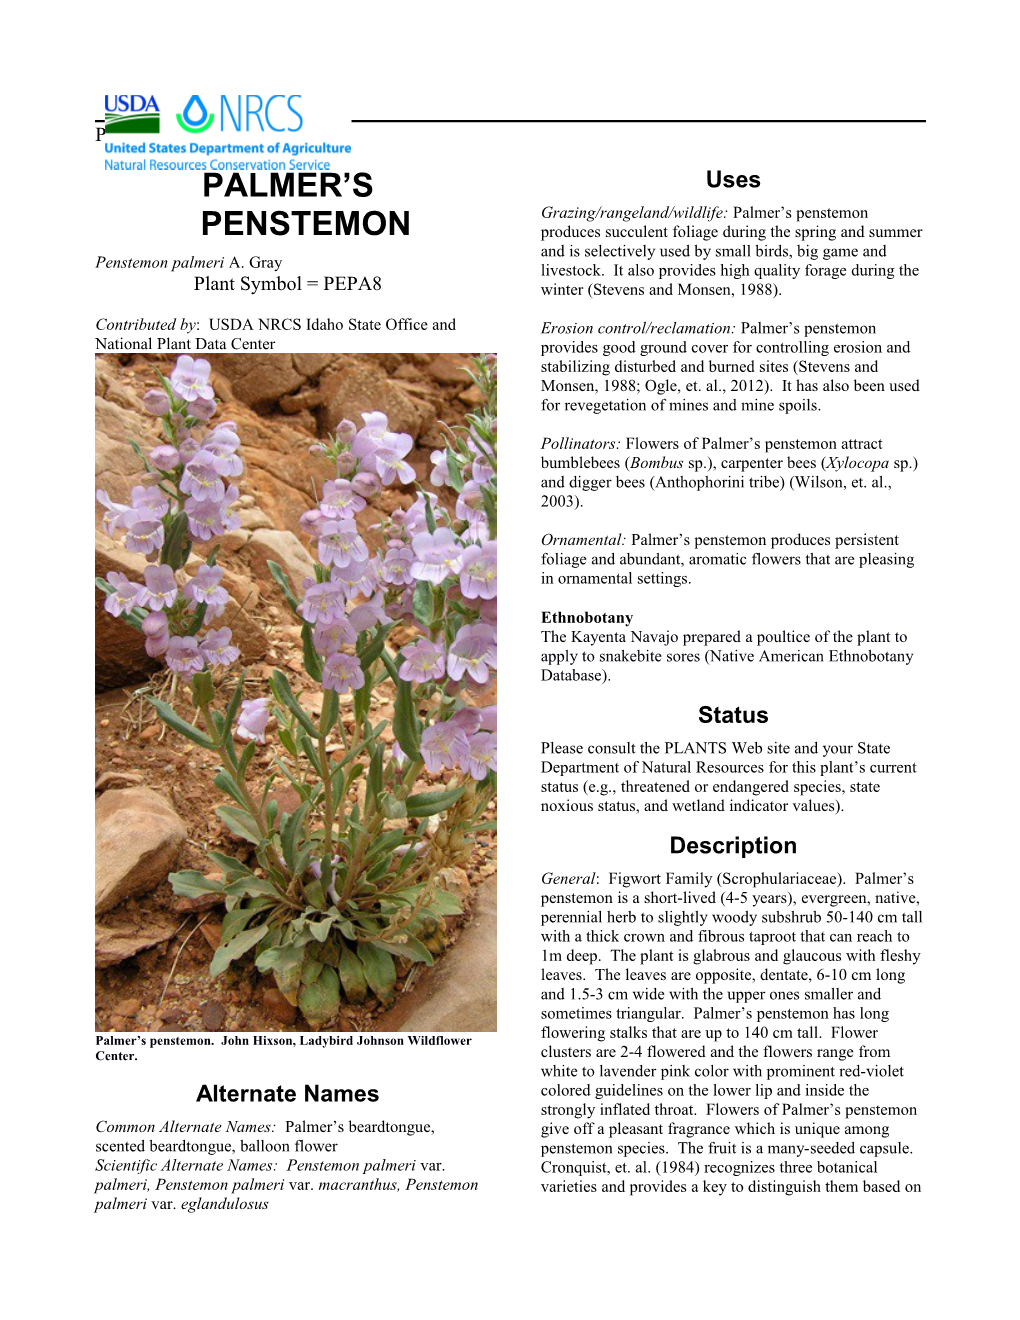 Palmer's Penstemon, Penstemon Palmeri, Plant Guide